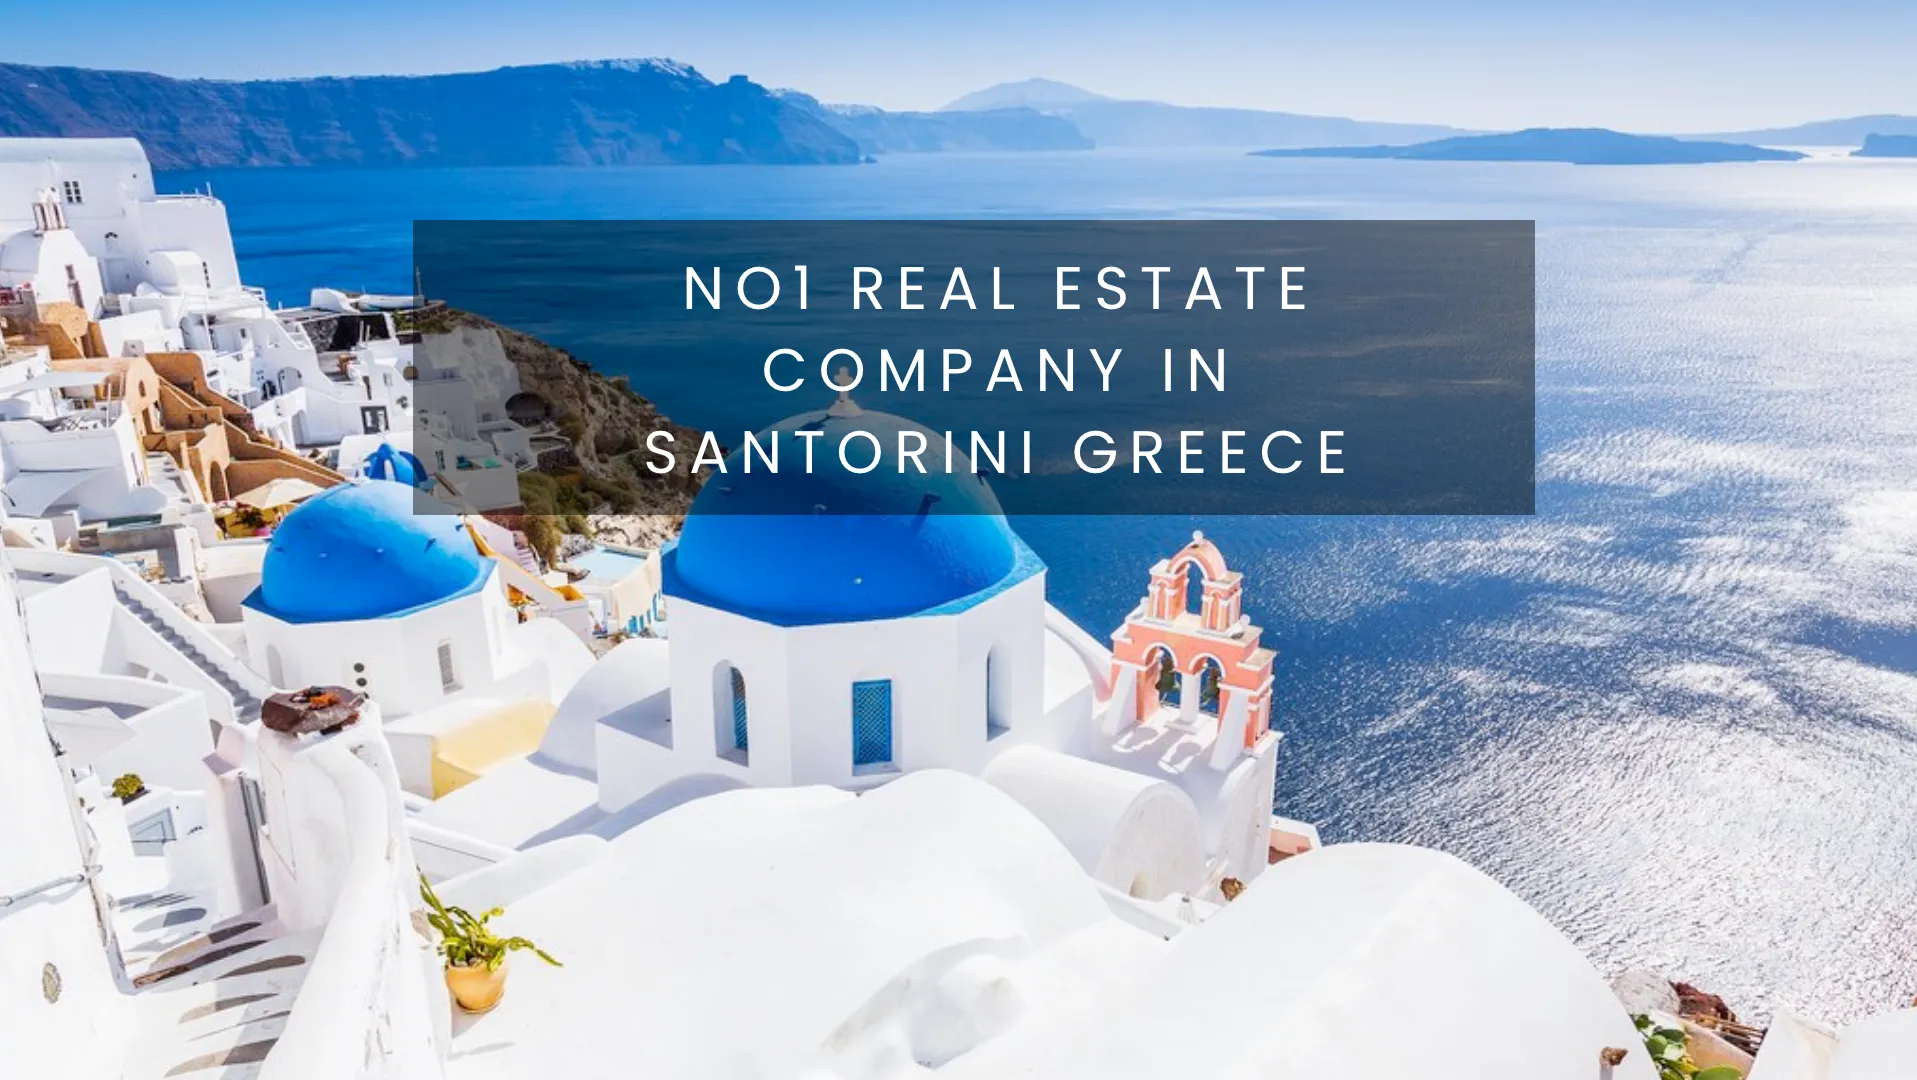 The No1 Real Estate Office in Santorini​